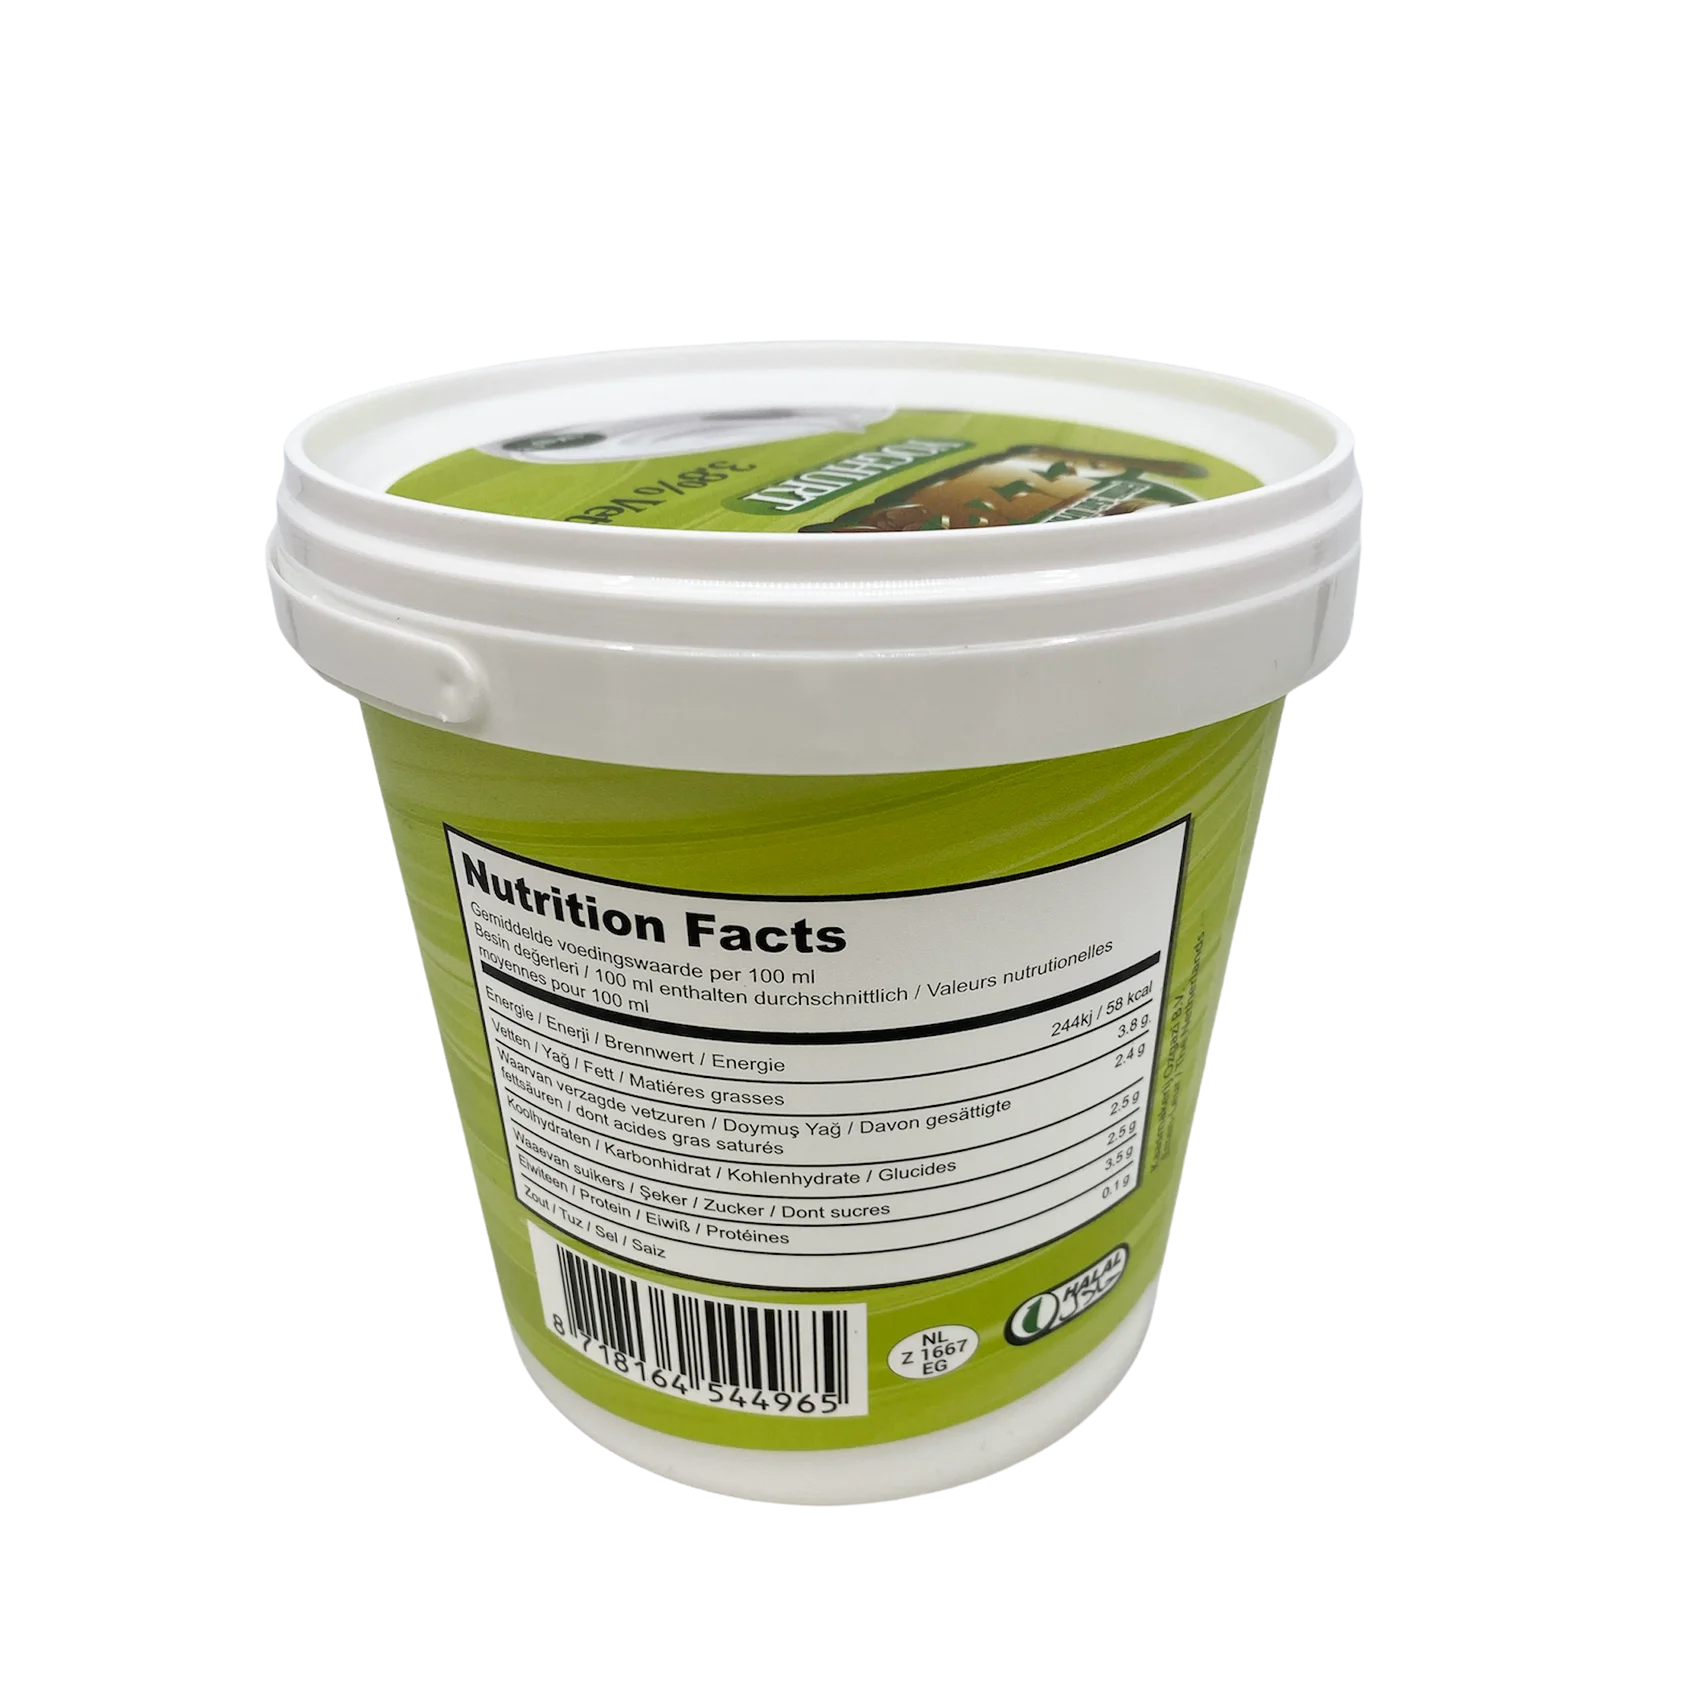 Premium Quality Halal  3.8% / 10% Fat Turkish Style Natural Plain Yogurt 1 kg 2 kg  From Netherlands For Sale